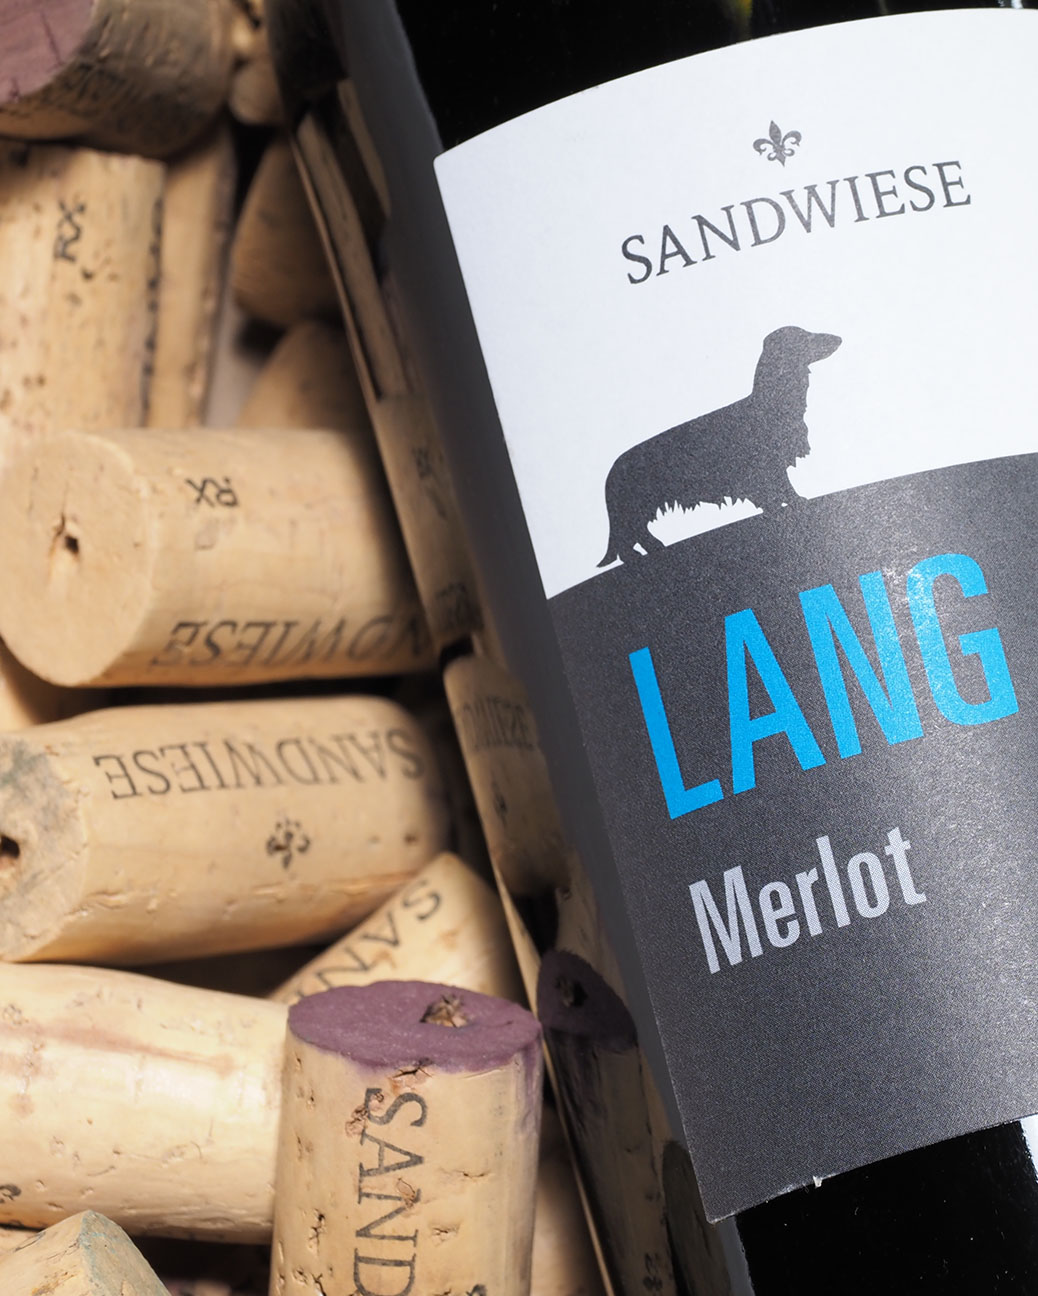 2022er Sandwiese – #8 trocken – Merlot, Weingut